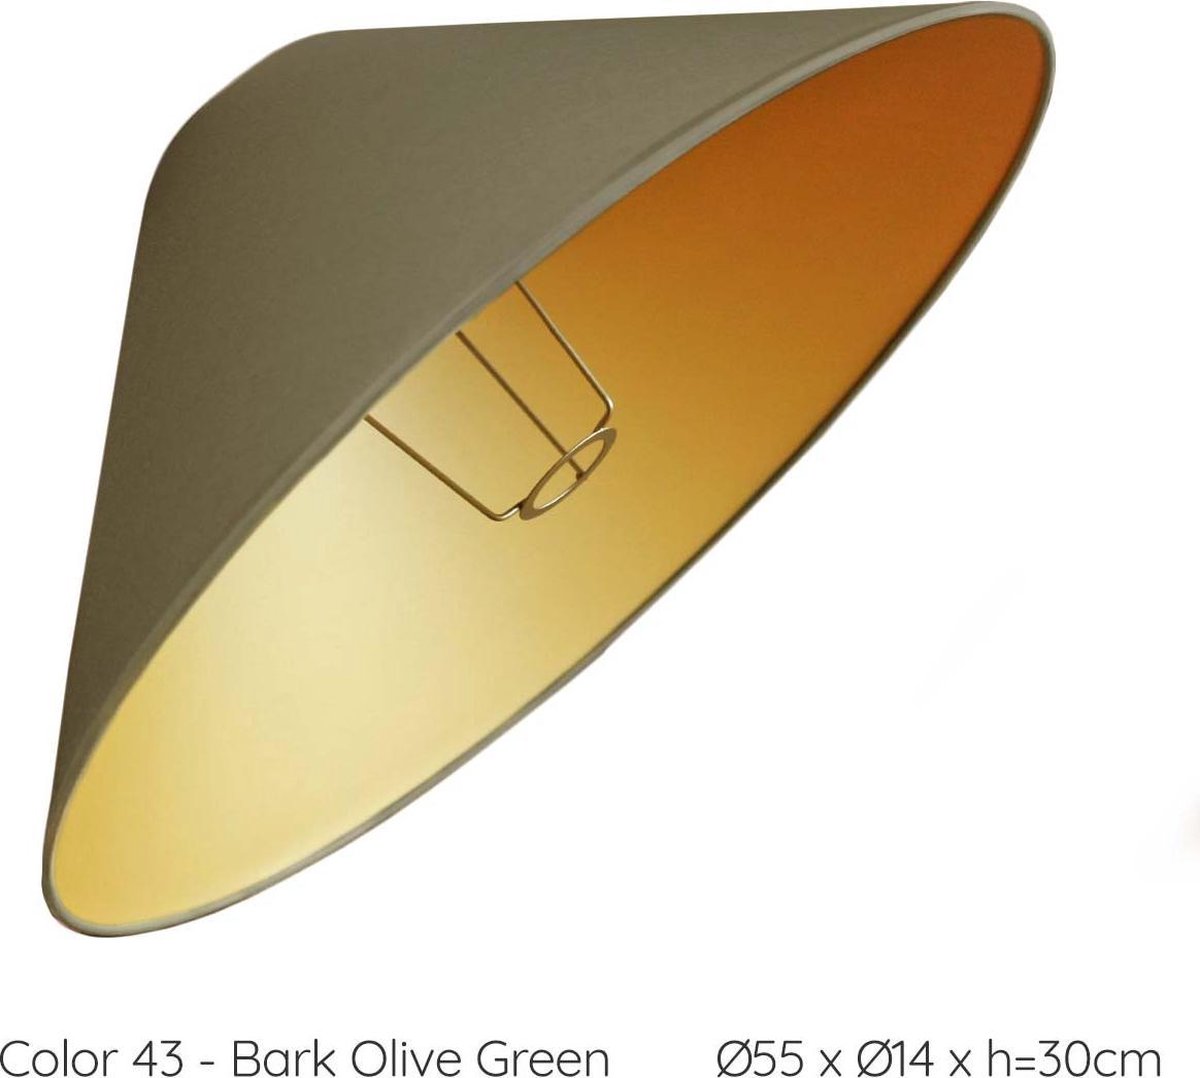 Lampenkap conisch vormig - Ø55 x Ø14 x h= 30cm - Bark Olive Green